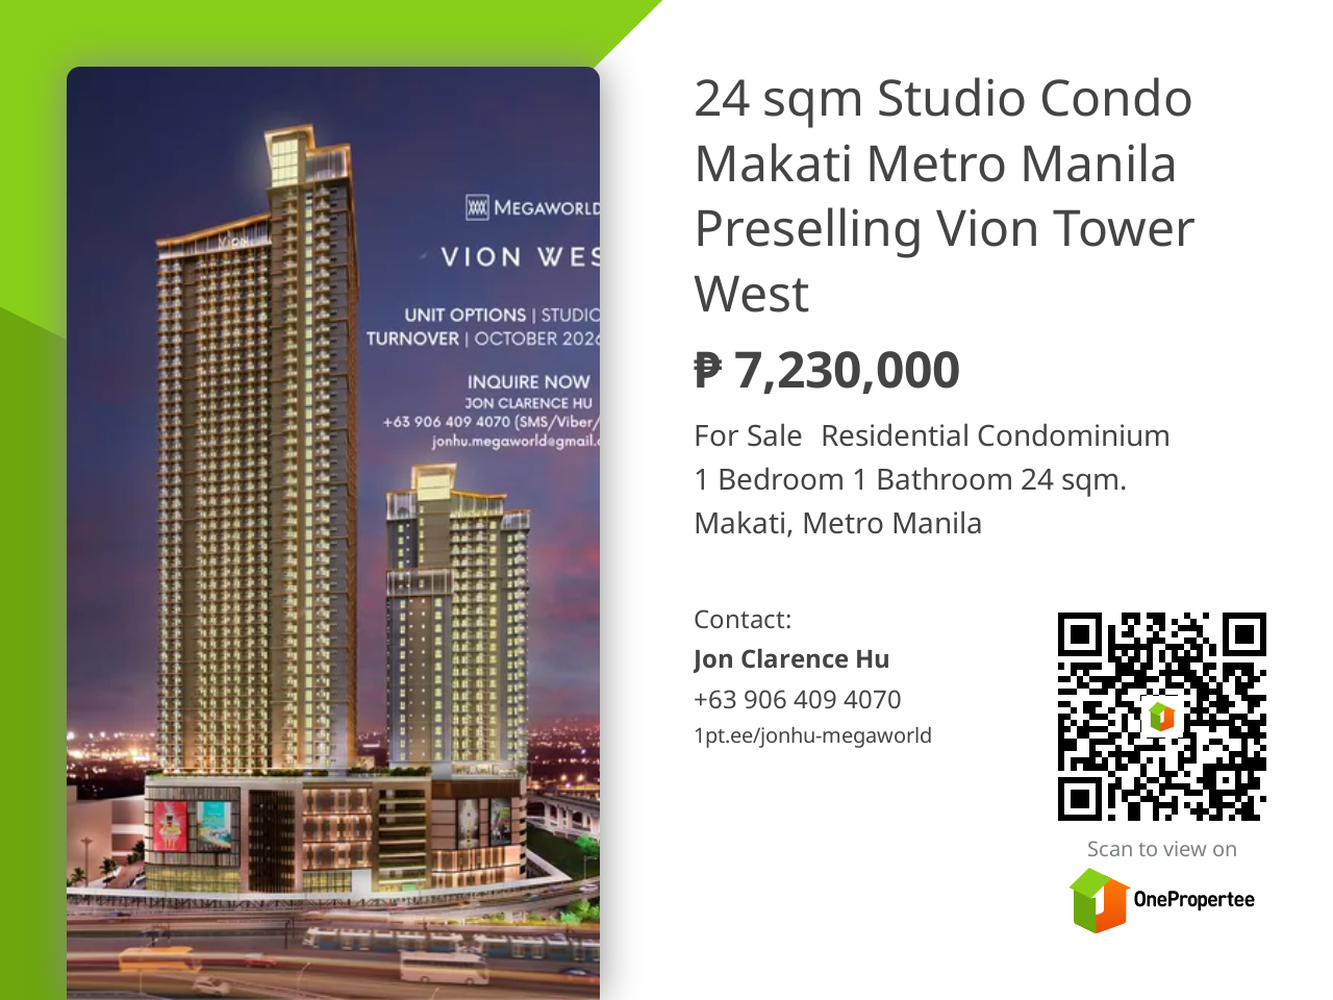 24 Sqm Studio Condo Makati Metro Manila Preselling Vion Tower West 2.S5nsdS2xdk4AyehKX 